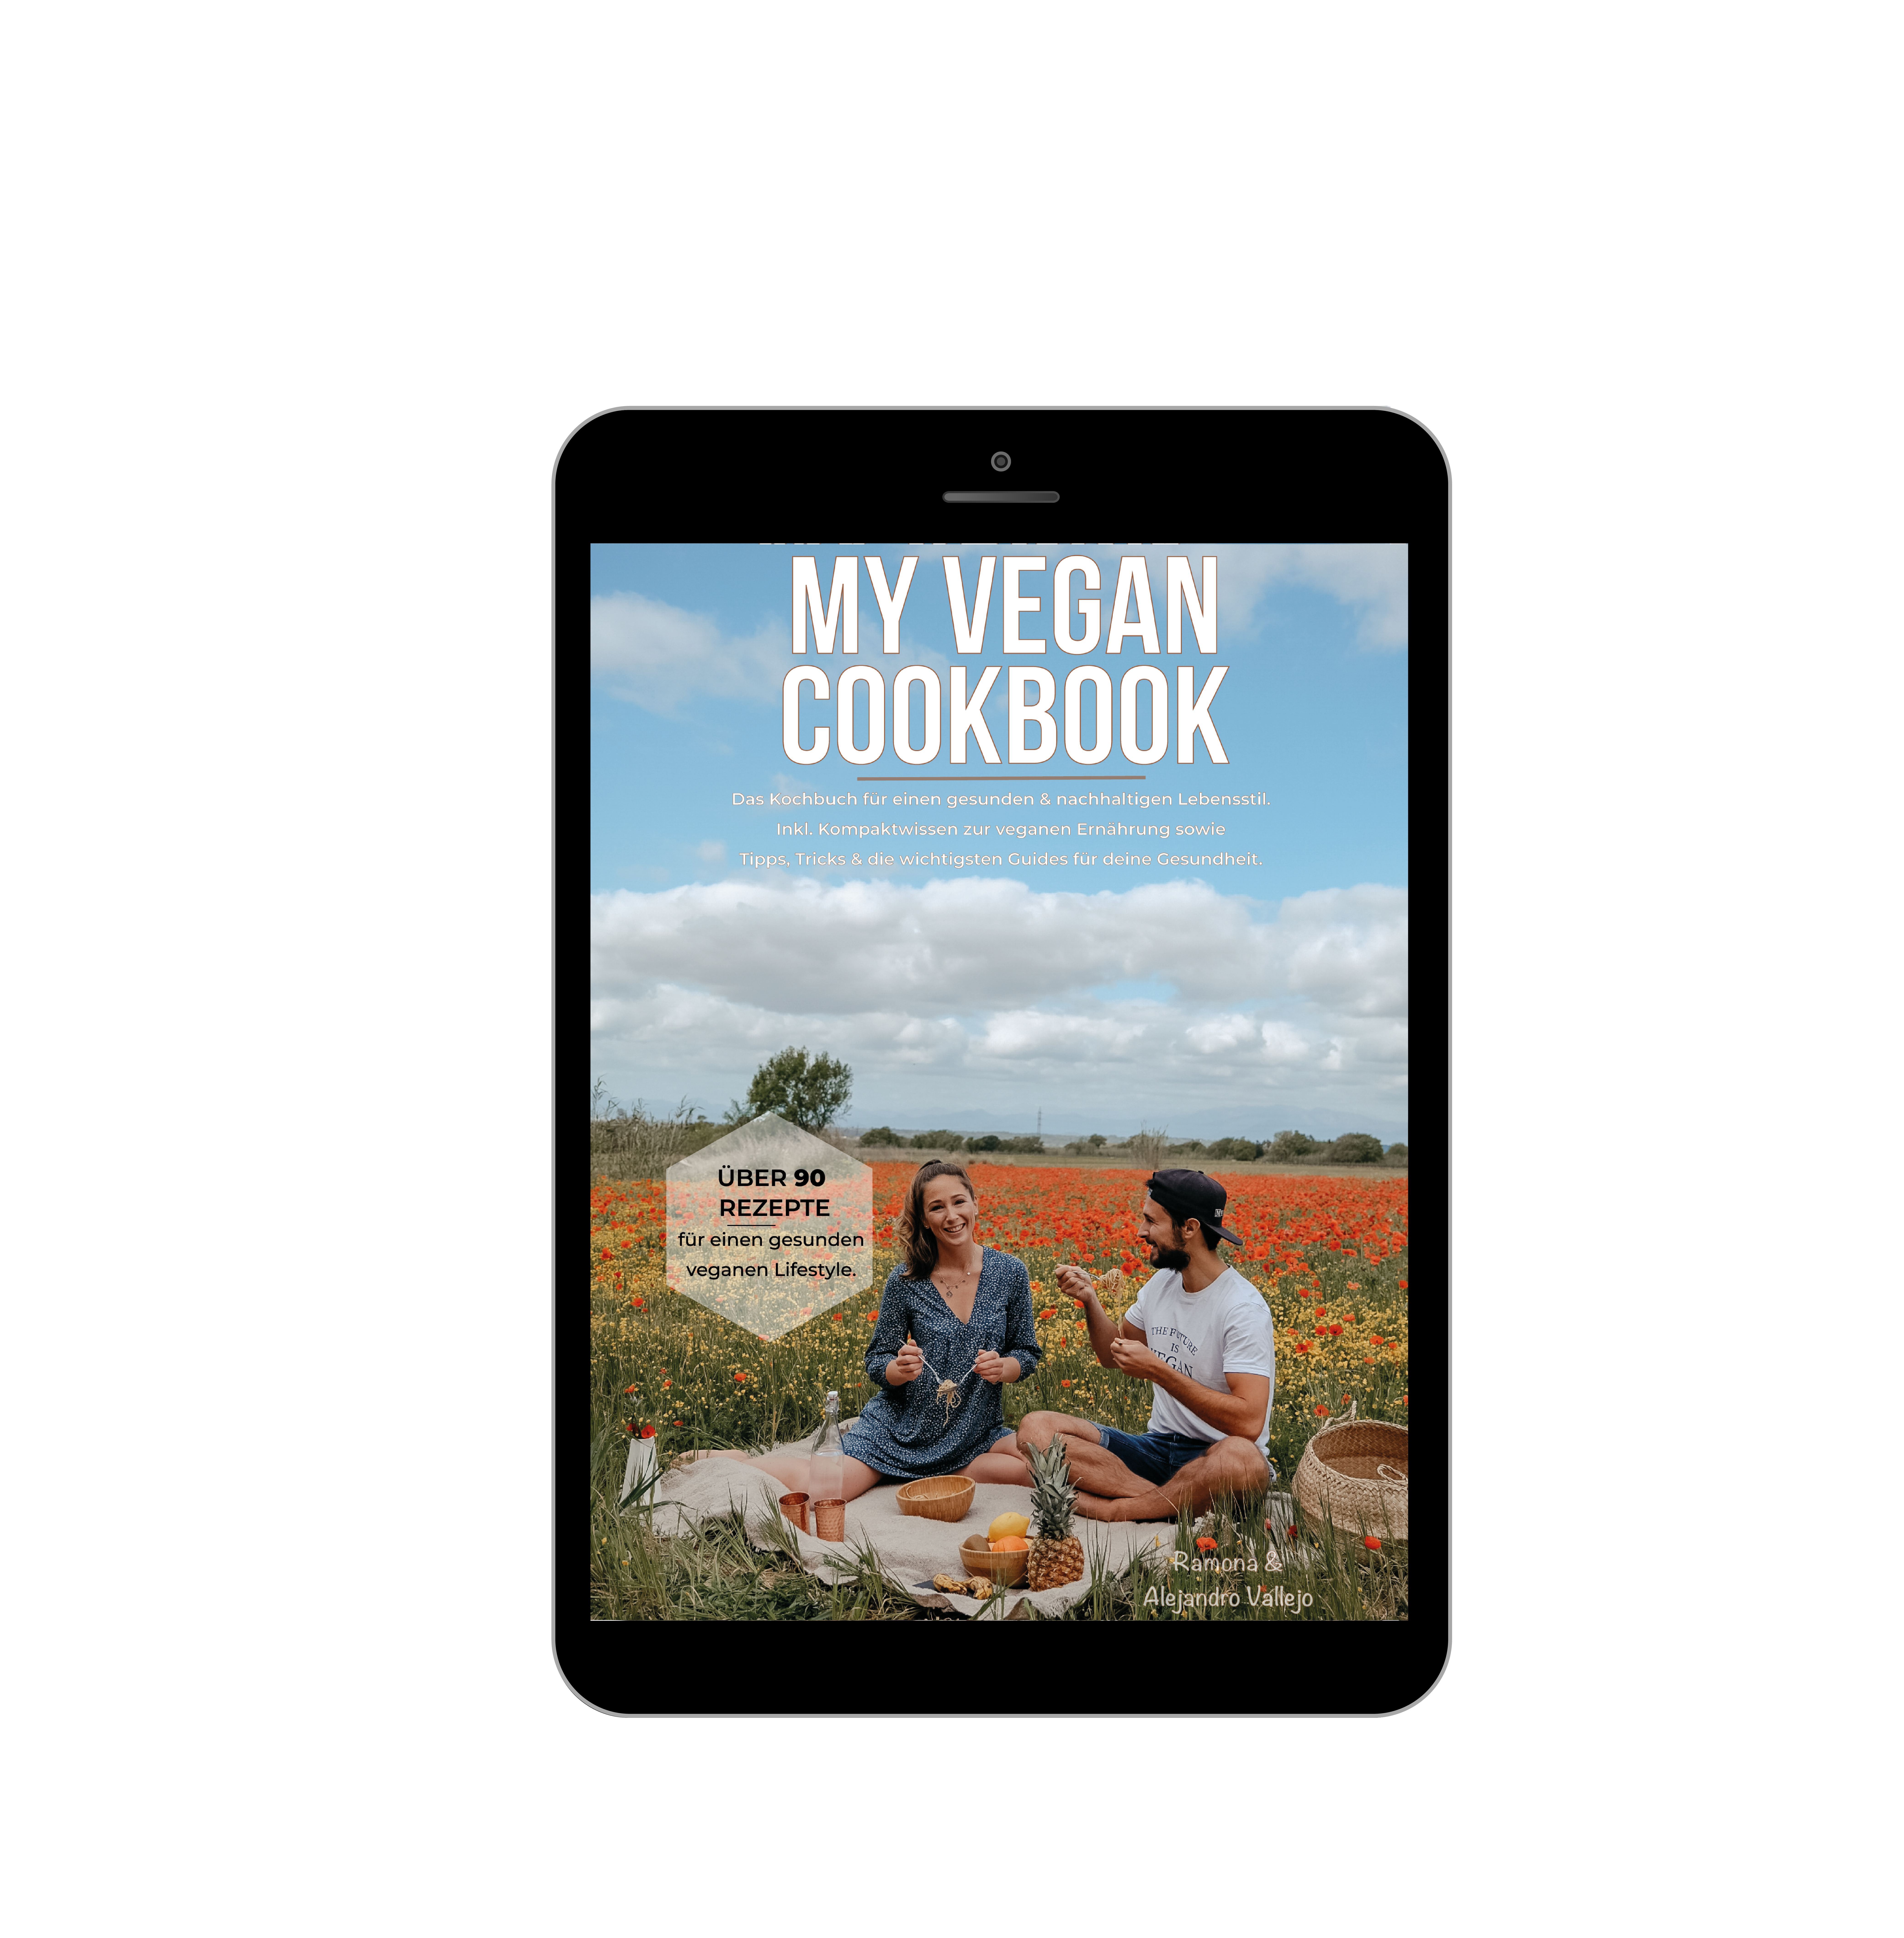 → Veganes Kochbuch 'MY VEGAN COOKBOOK' (Ebook) | 92 Rezepte | Vegan Backen, Frühstück, schnelle Rezepte, u.v.m. | Inkl. Wissen & Guides. ←